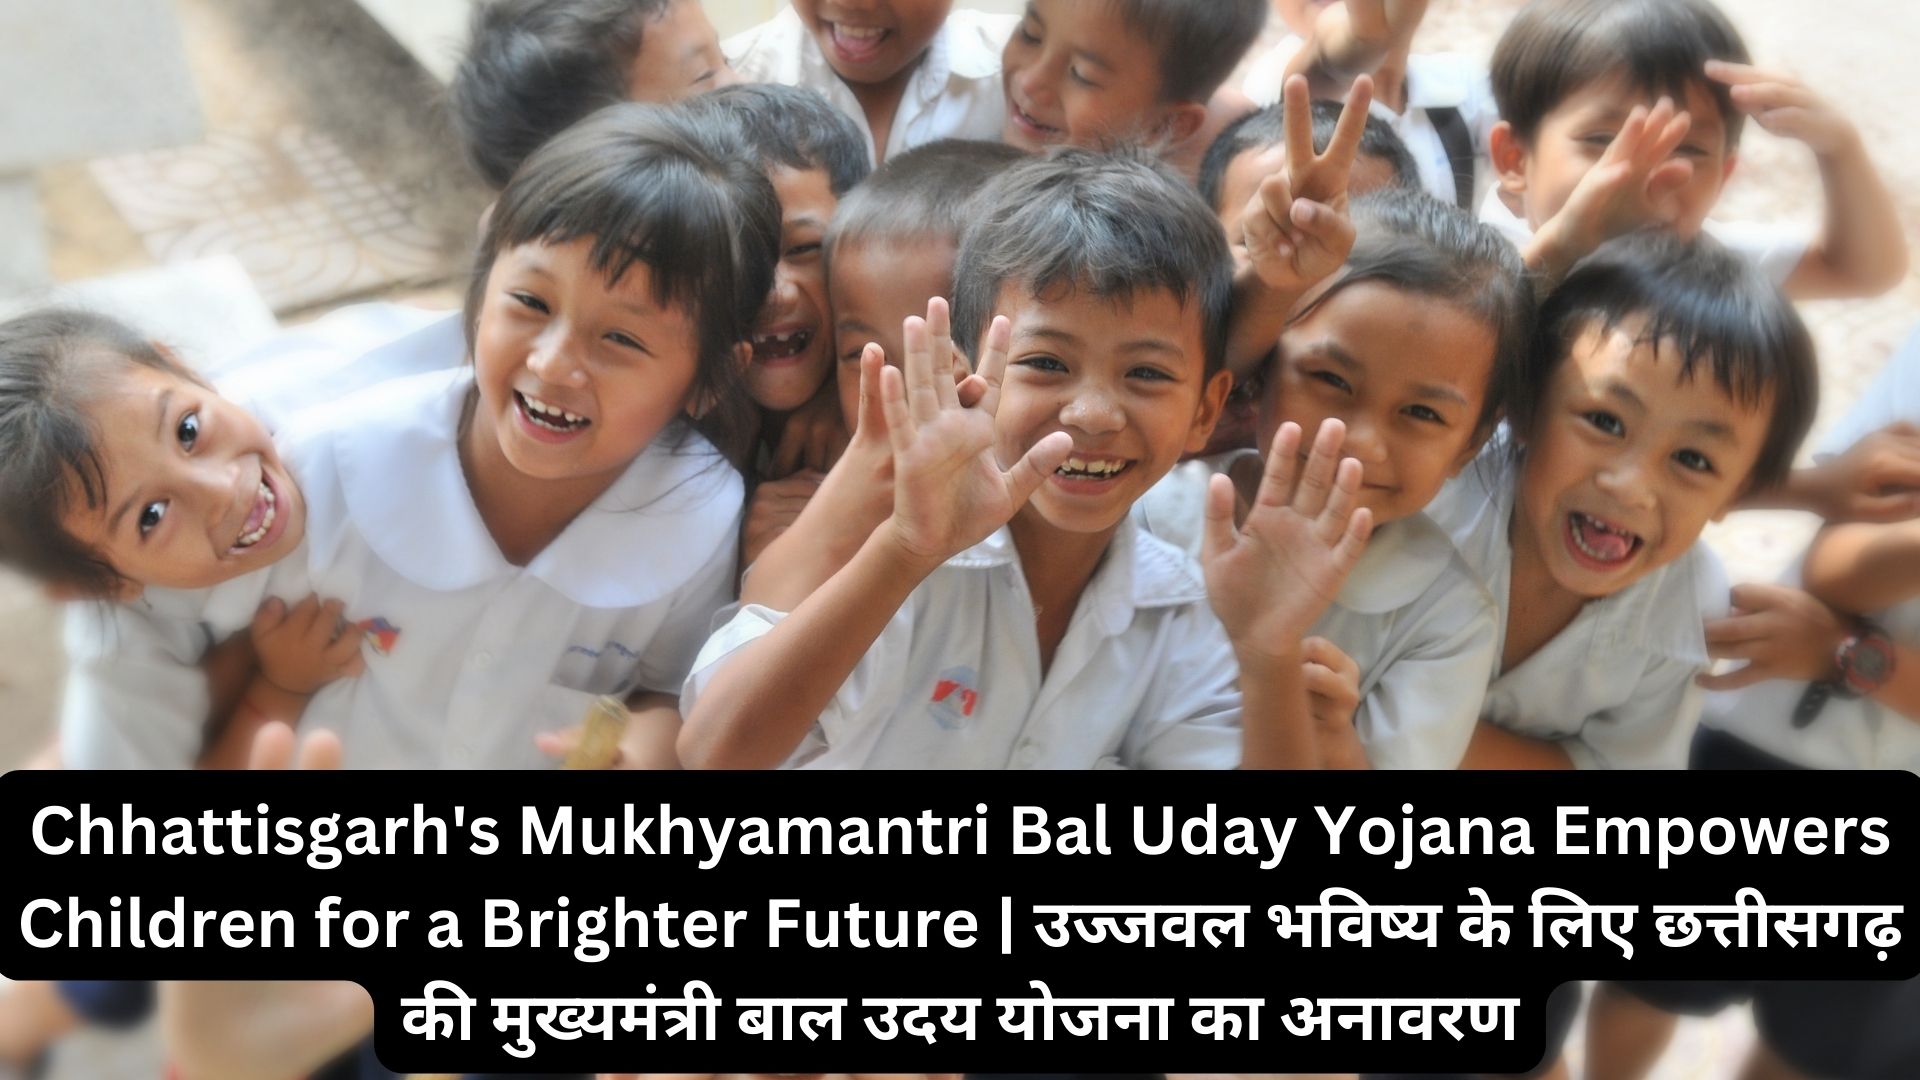 Chhattisgarh's Mukhyamantri Bal Uday Yojana Empowers Children for a Brighter Future | उज्जवल भविष्य के लिए छत्तीसगढ़ की मुख्यमंत्री बाल उदय योजना का अनावरण